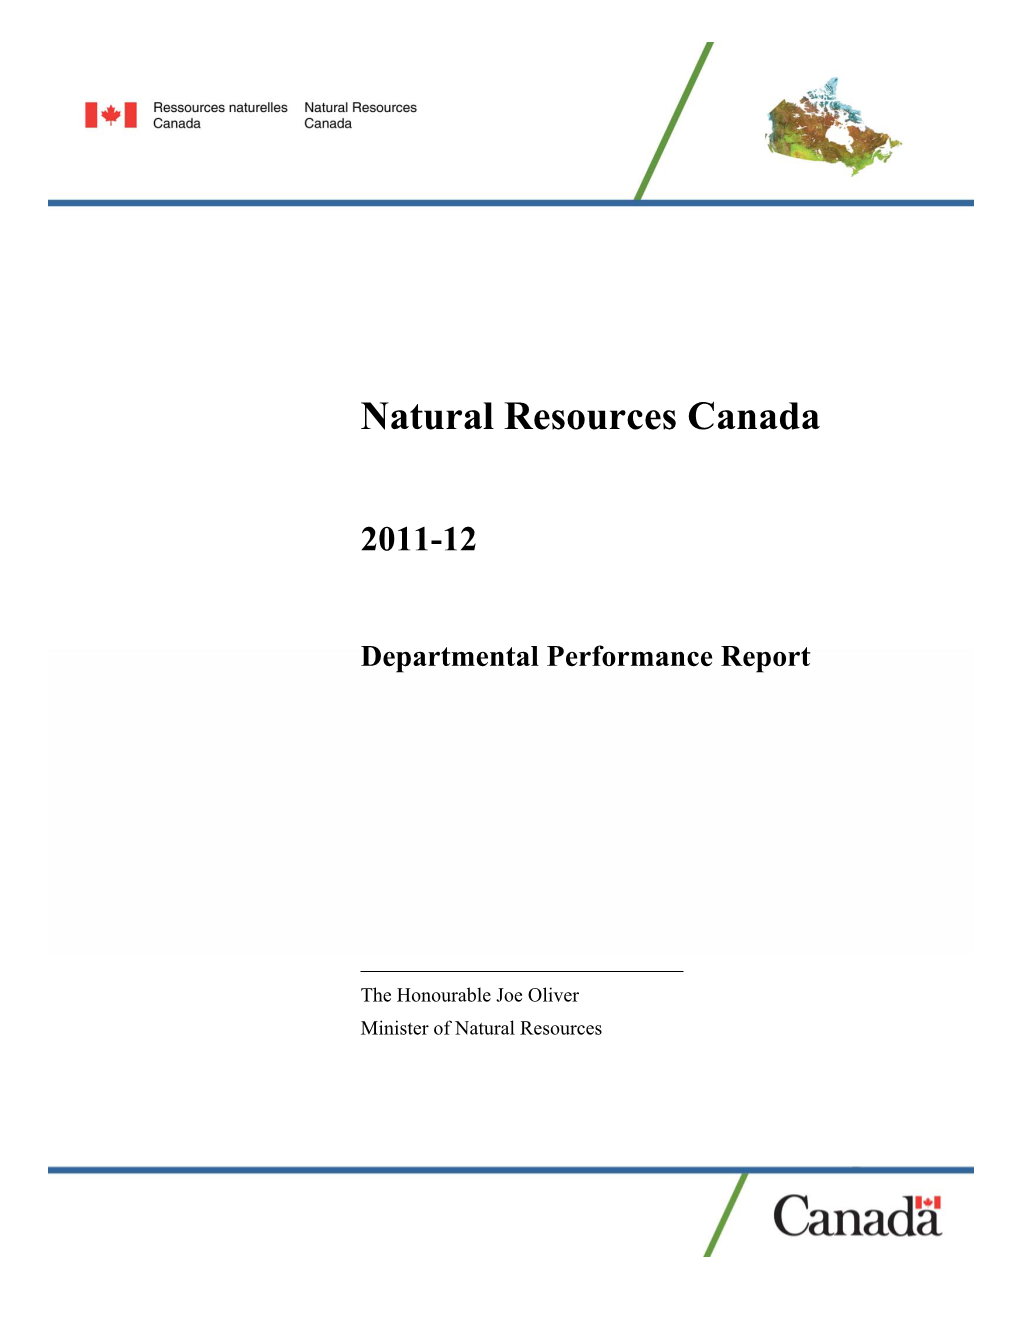 Departmental Performance Report